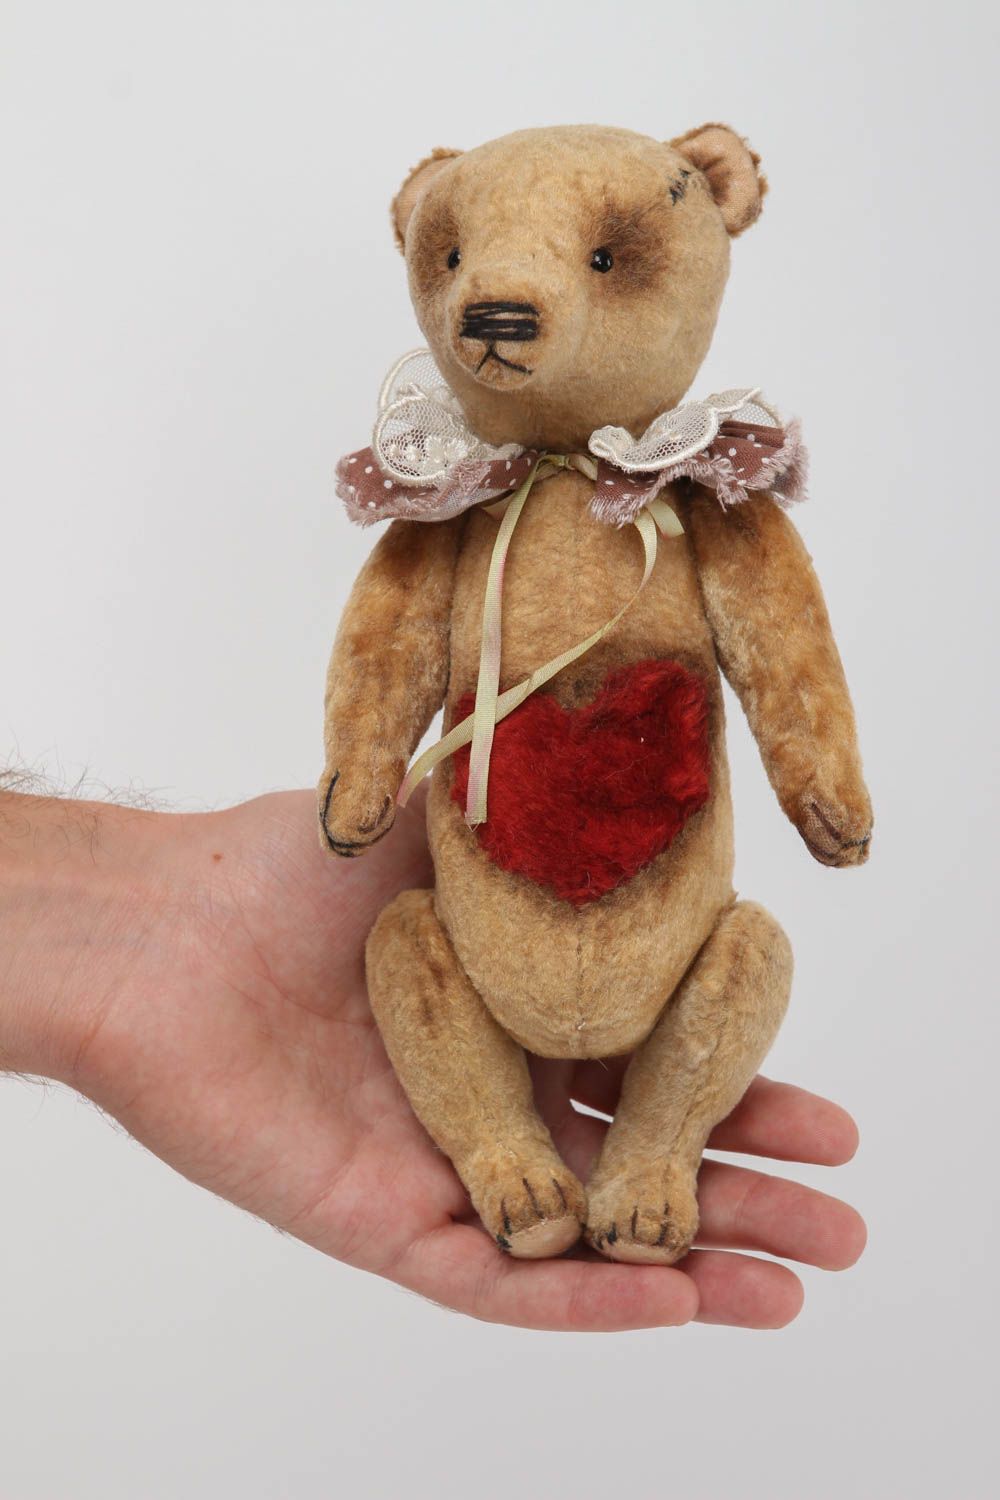 Handmade bear in vintage style unusual designer soft toy cute plush toy photo 5